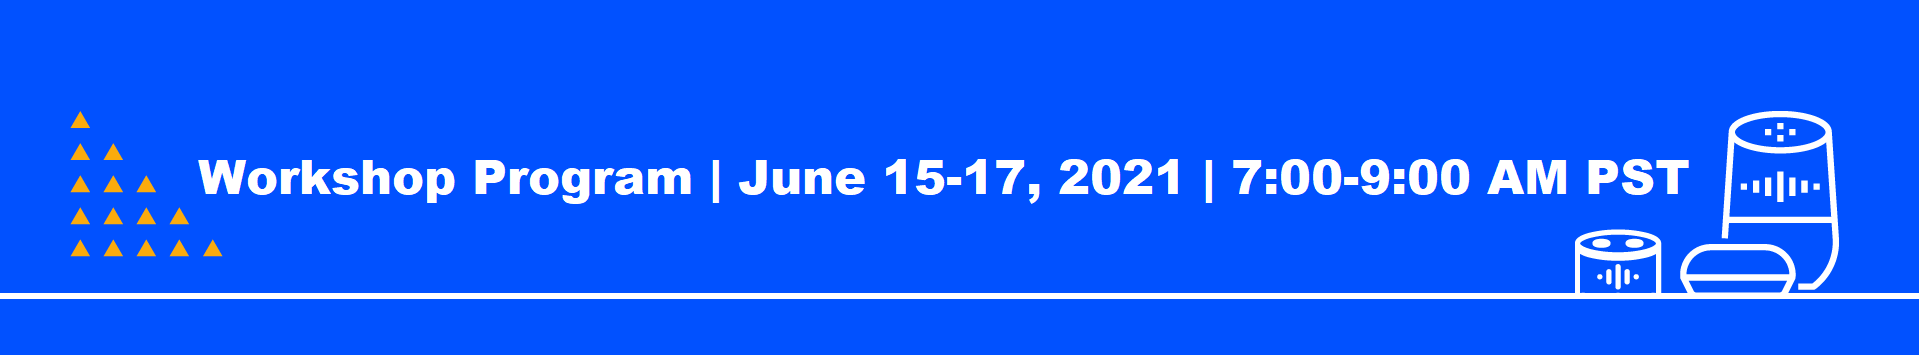 Workshop Program | June 15-17, 2021 | 7:00-9:00 AM PST